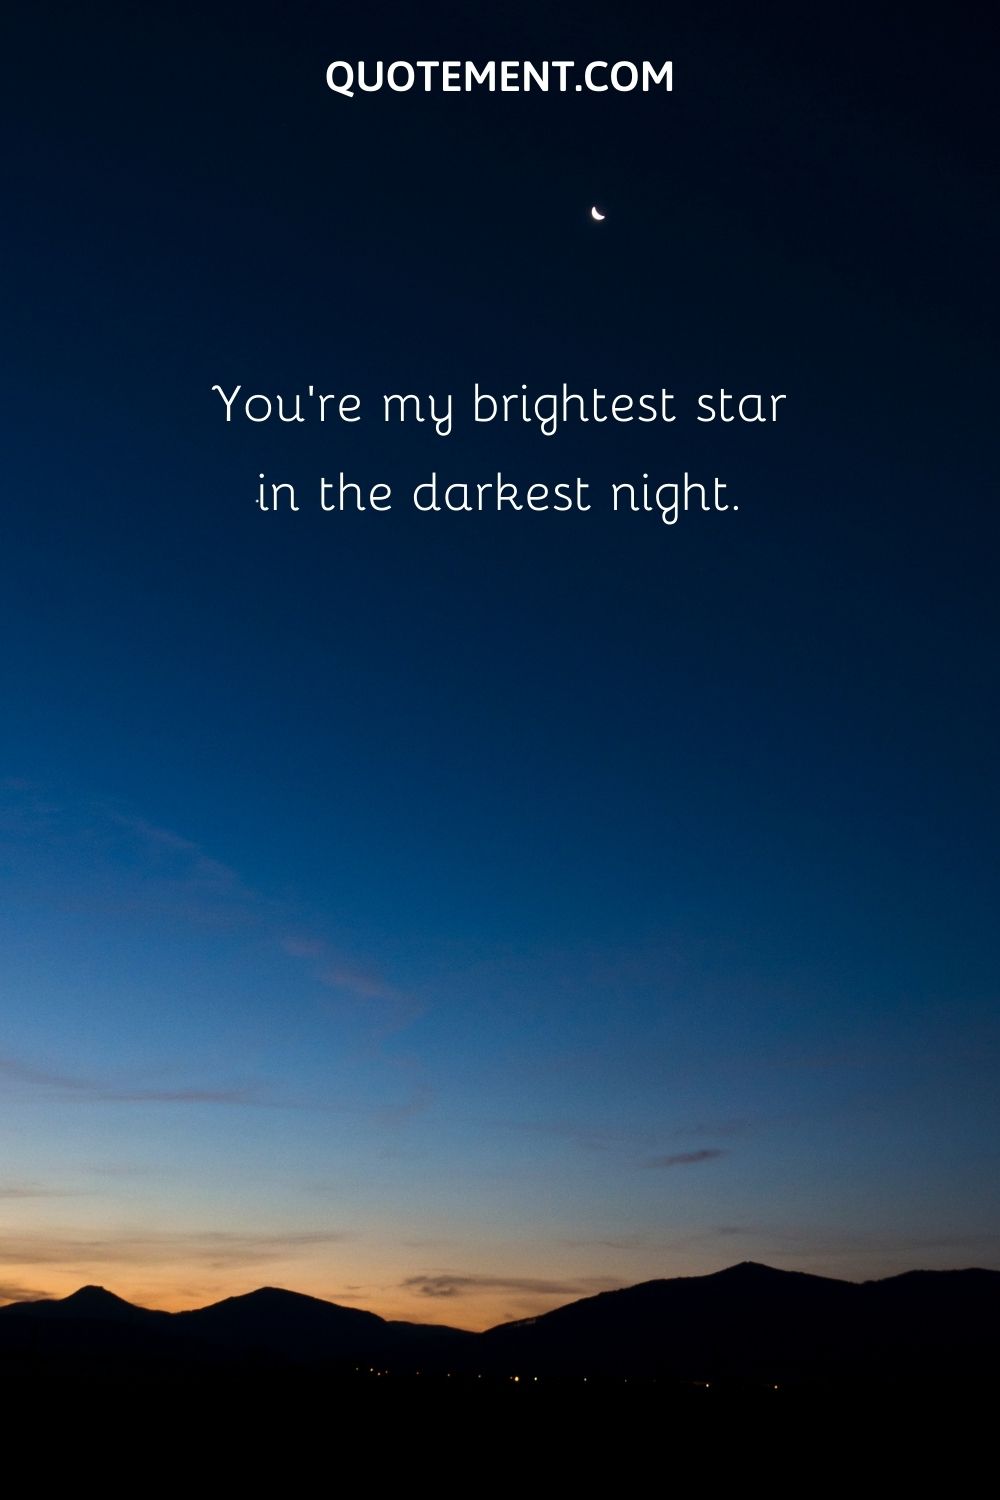 You’re my brightest star in the darkest night